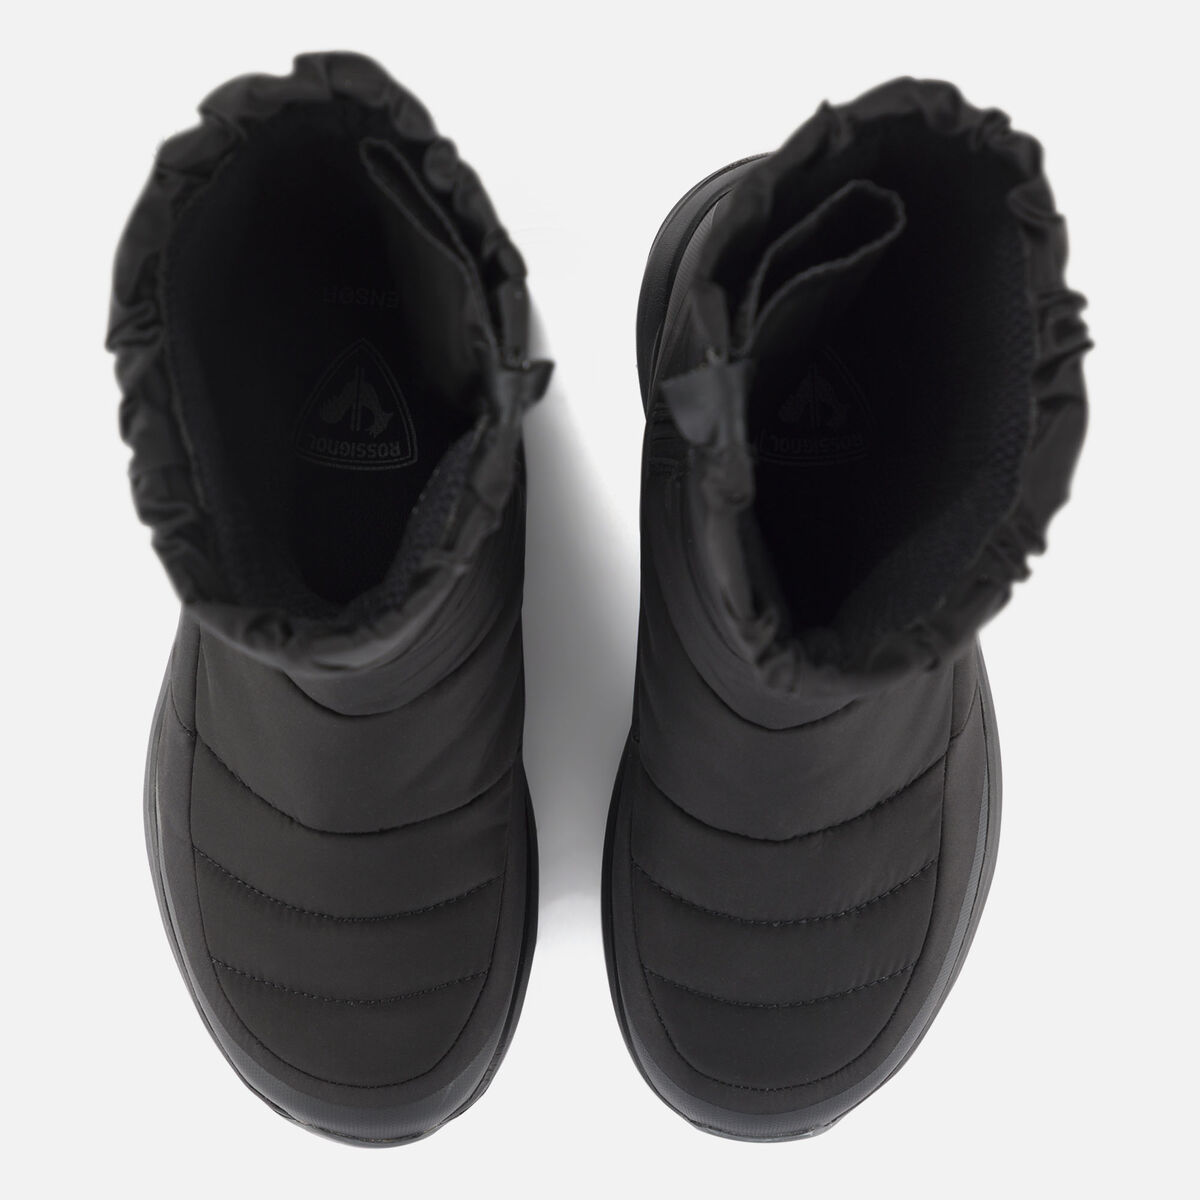 Rossignol Women's Podium Knee High Black Boots black